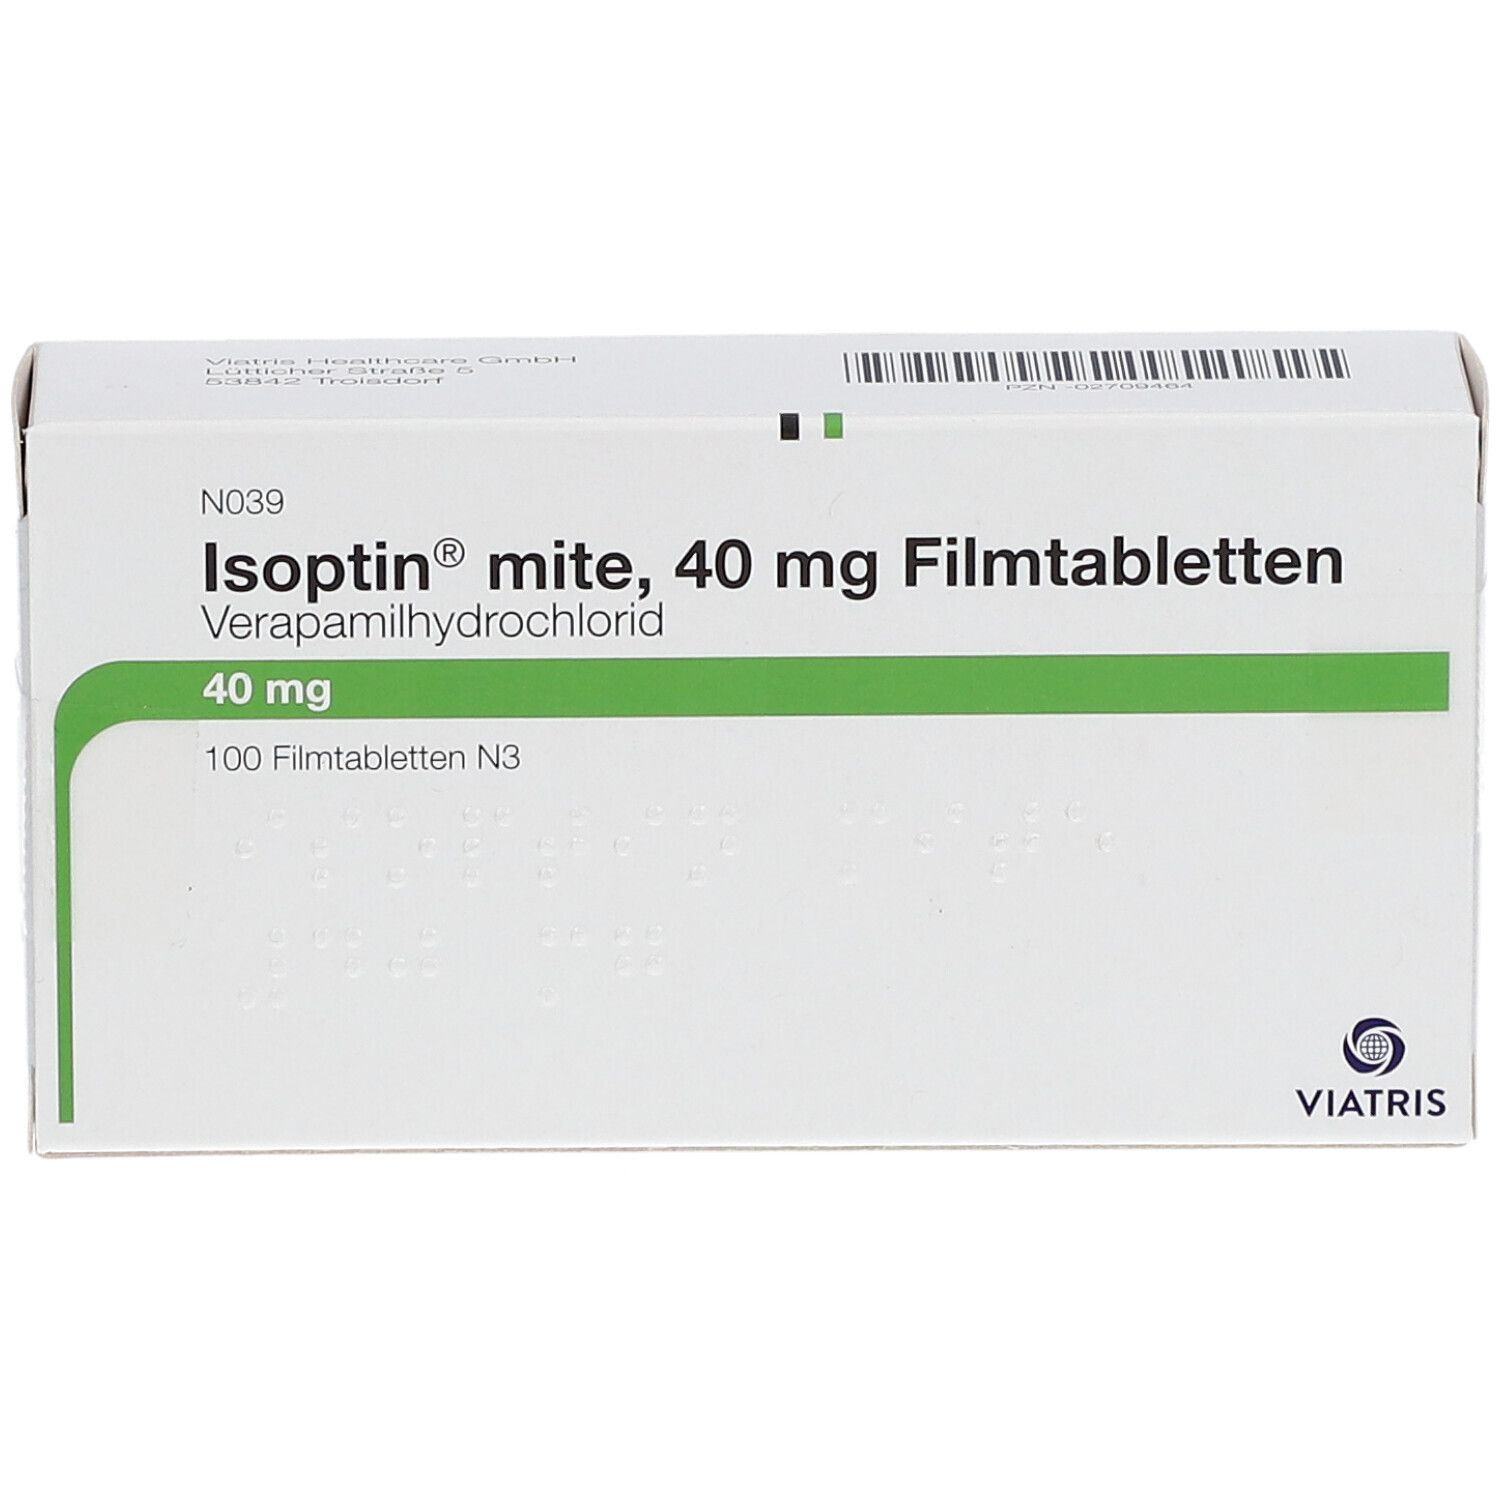 Isoptin® mite 40 mg